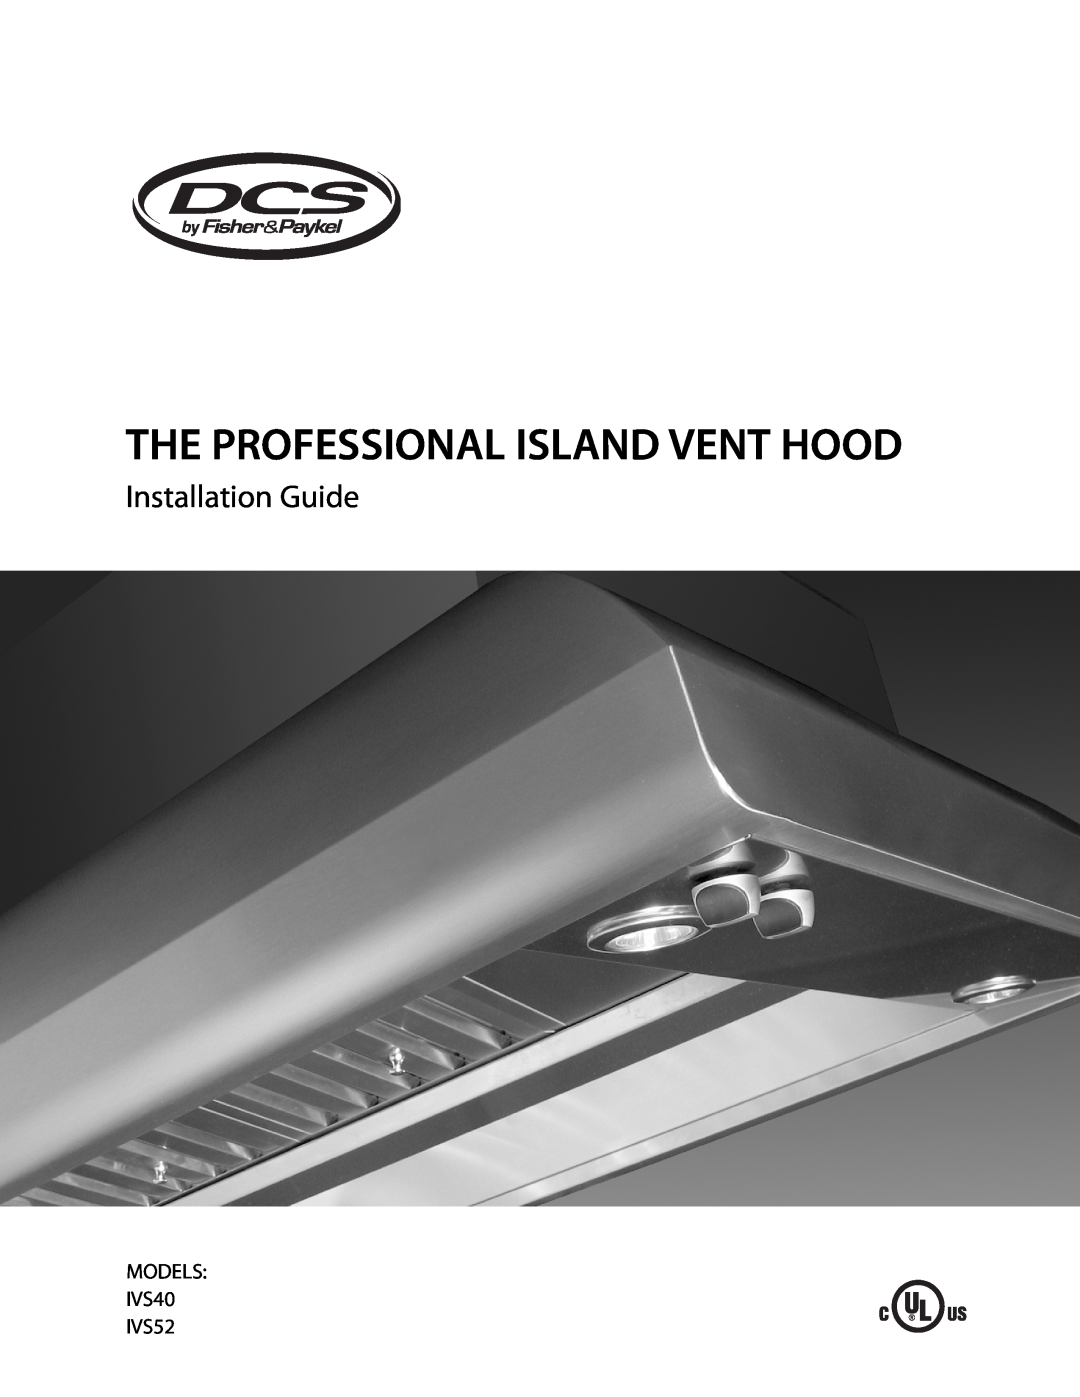 DCS 221712 manual Installation Guide, MODELS IVS40 IVS52, The Professional Island Vent Hood 